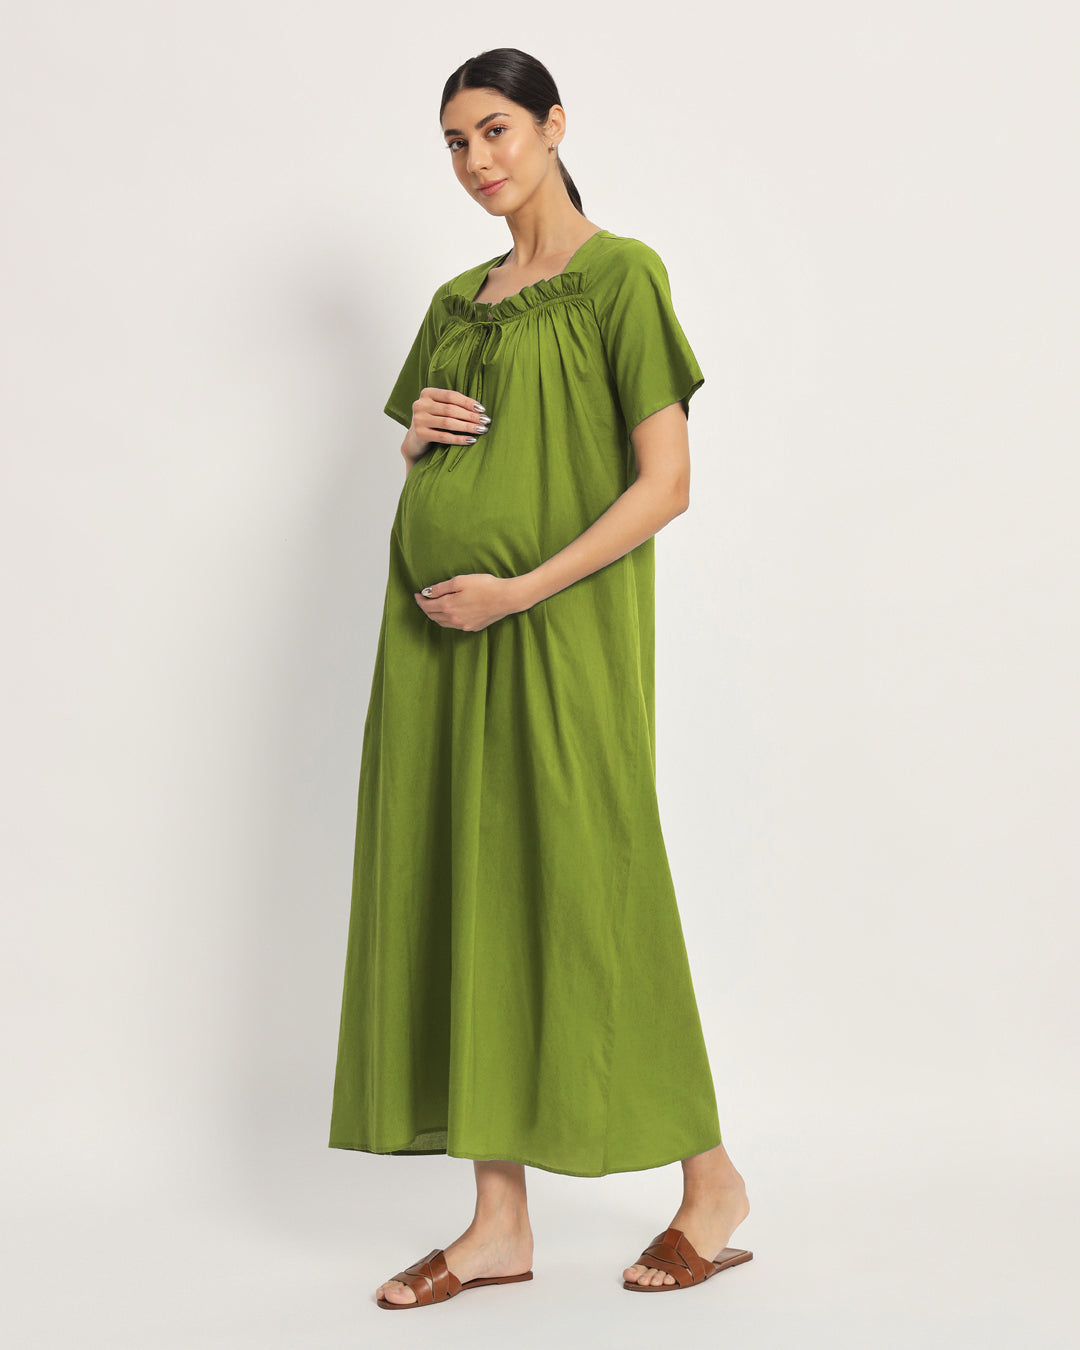 Combo: Lilac & Sage Green Nurture N' Shine Maternity & Nursing Dress